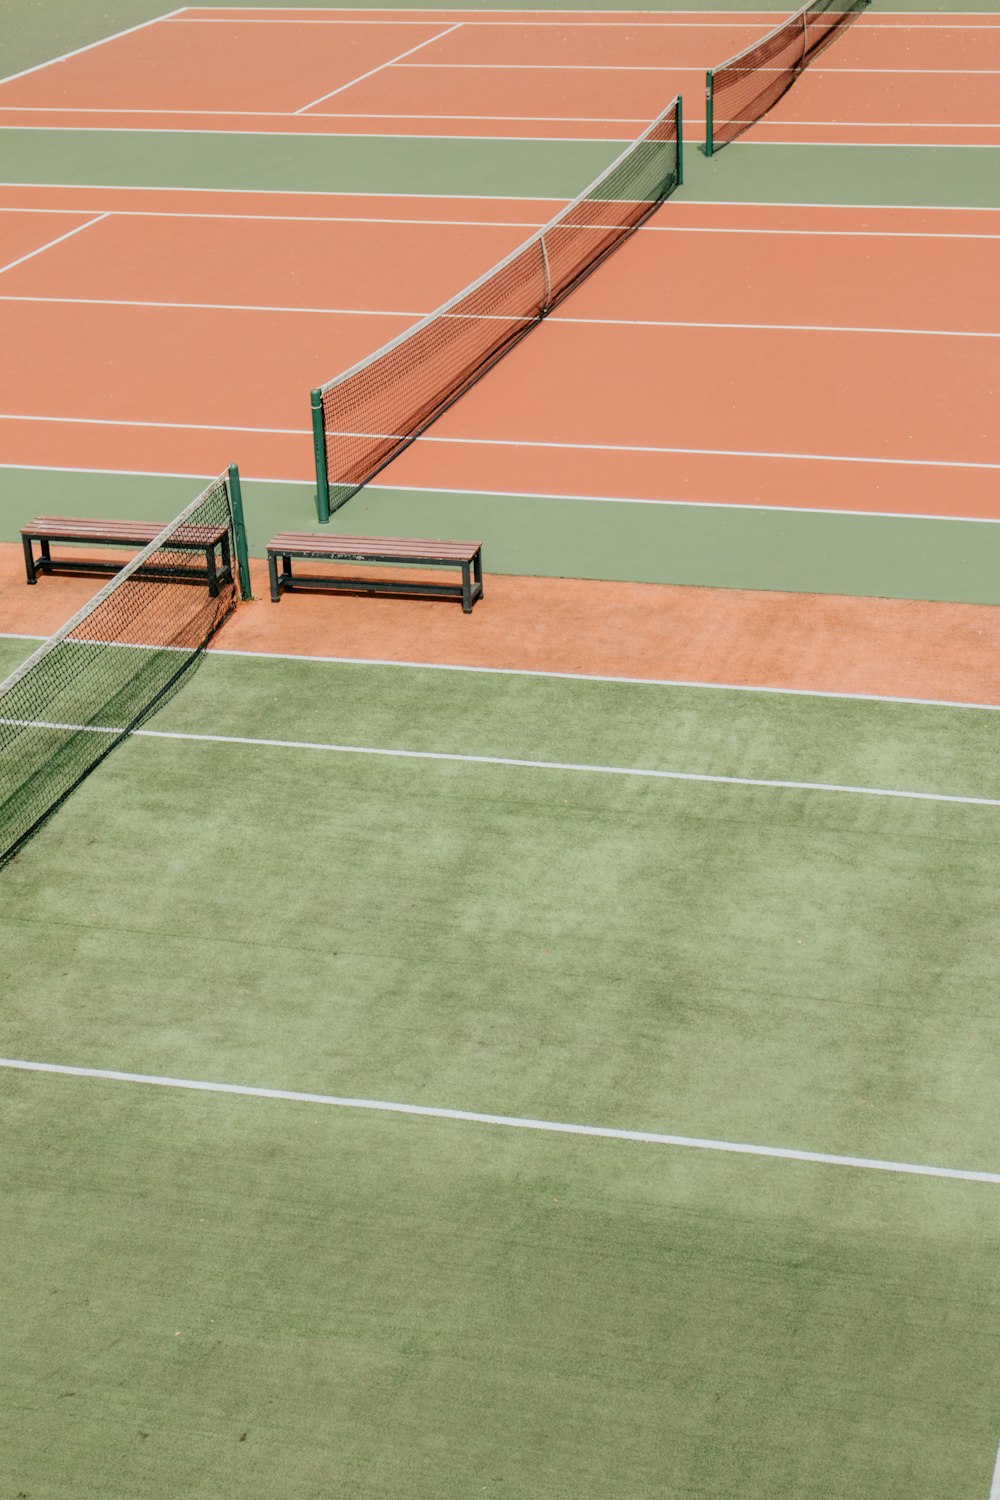 Leere grüne und orangefarbene Tennisfelder